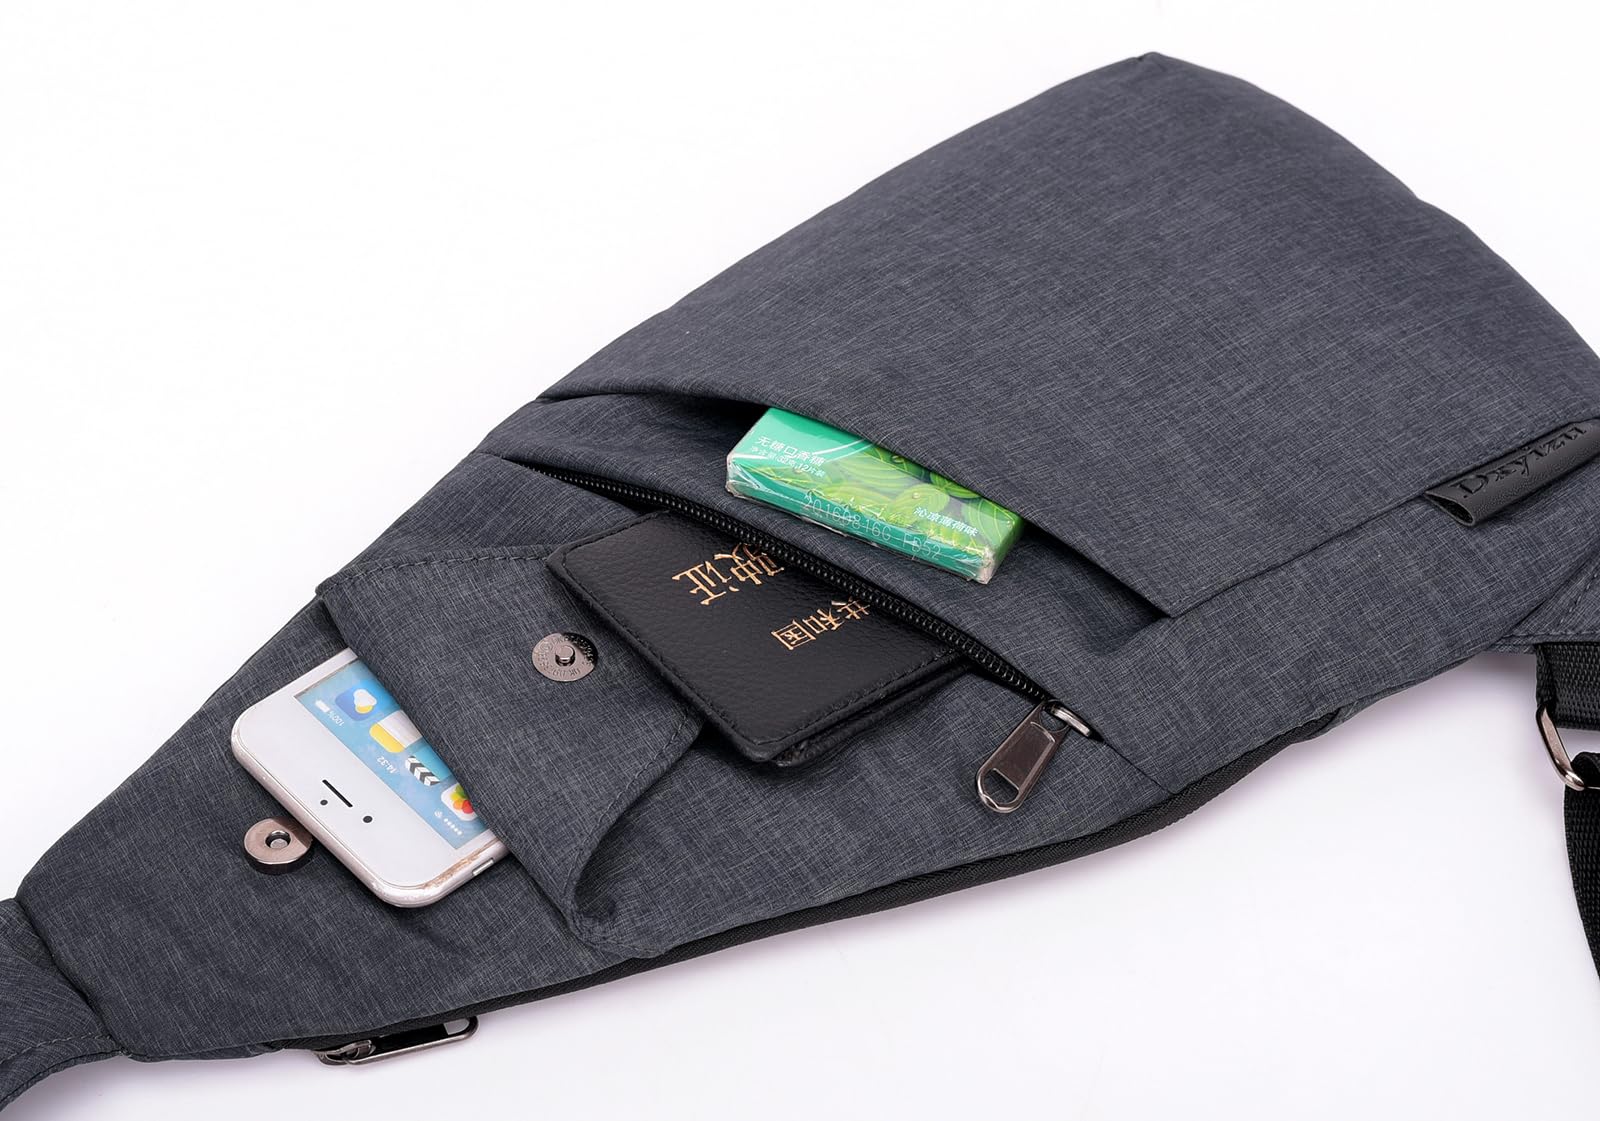 Wytidian Sling Bag Anti-Thief Crossbody Bag for Men Women Lightweight Personal Pocket Chest Bag for Travel Hiking Camping (Dark Grey)